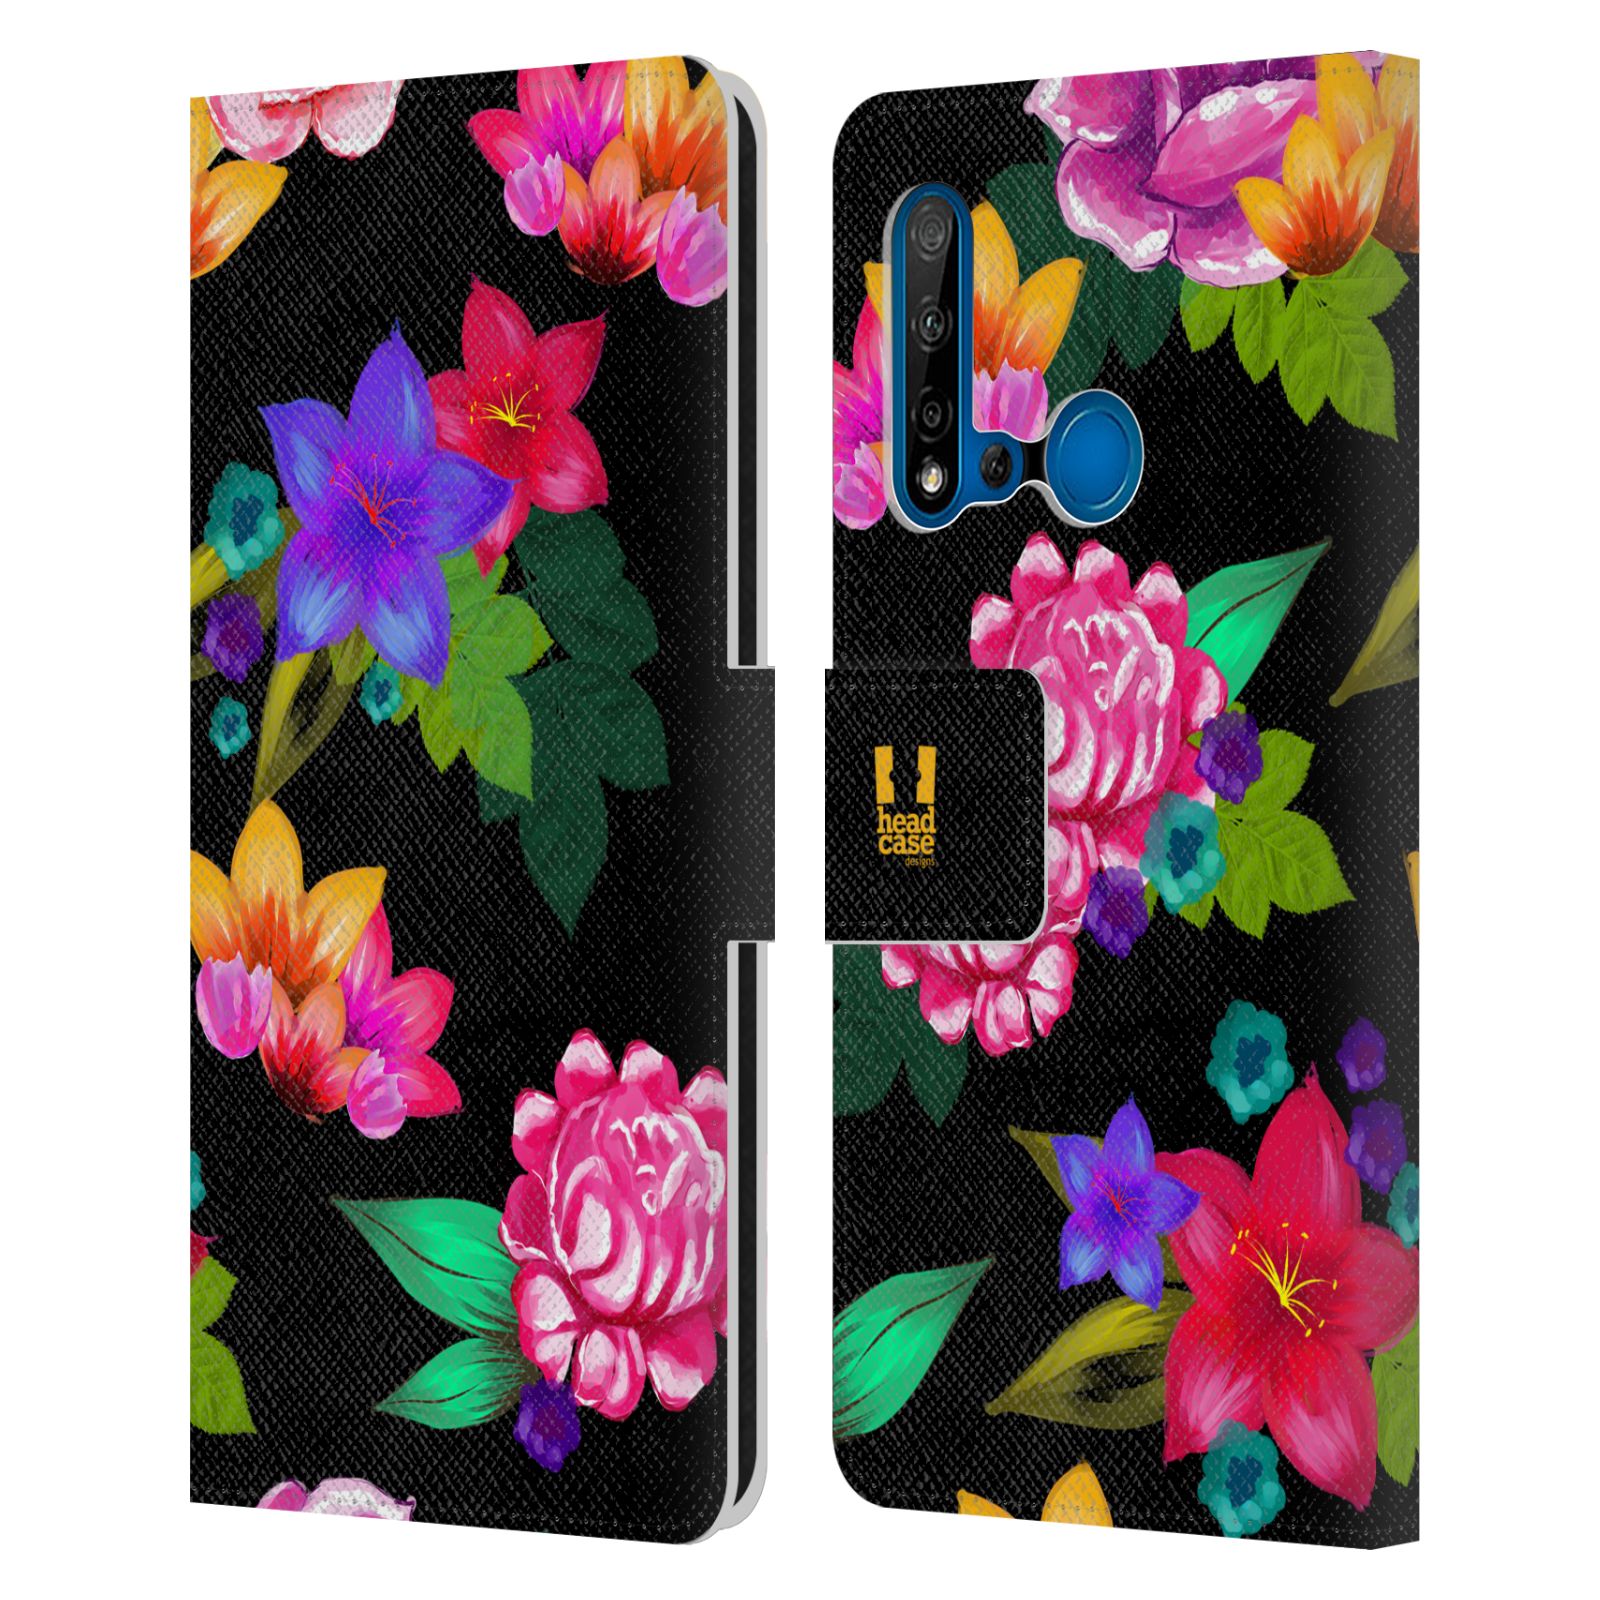 Pouzdro na mobil Huawei P20 LITE 2019 barevné kreslené květiny černá